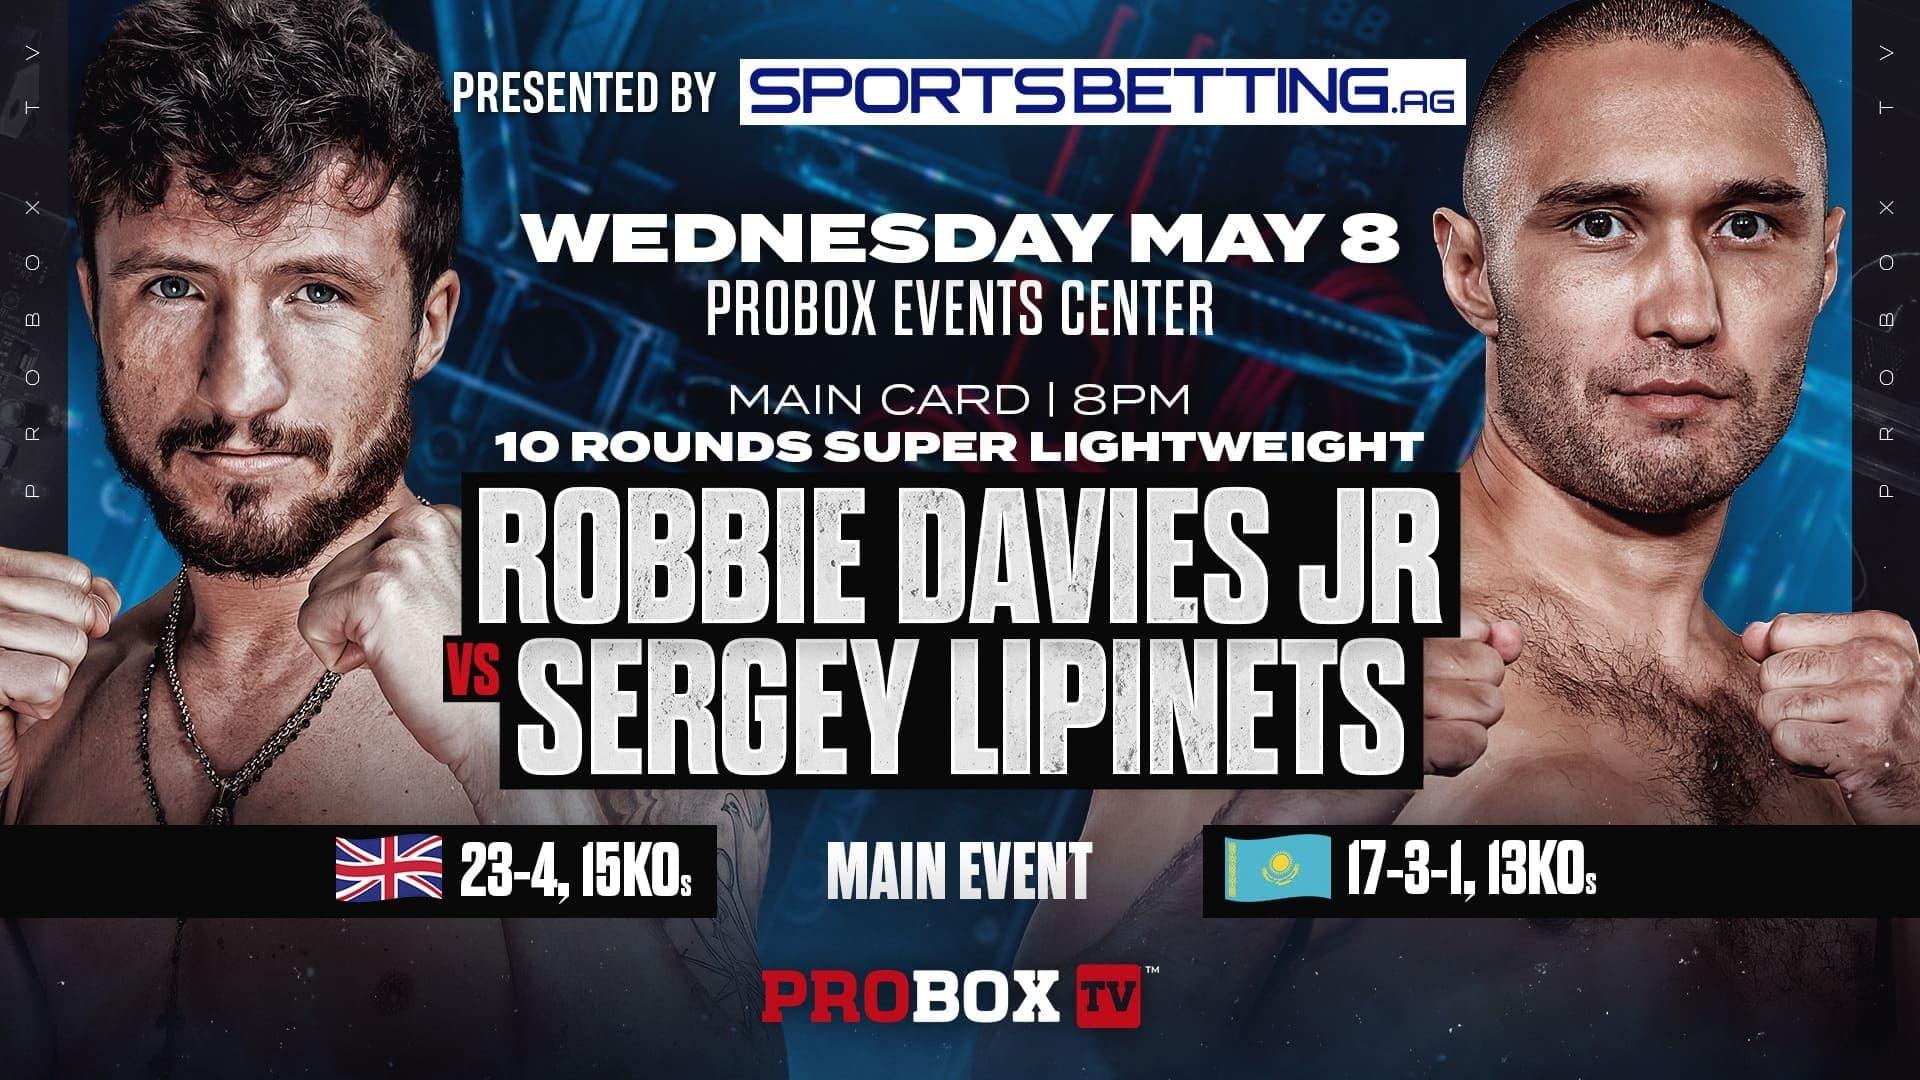 Robbie Davies Jr vs. Sergey Lipinets backdrop